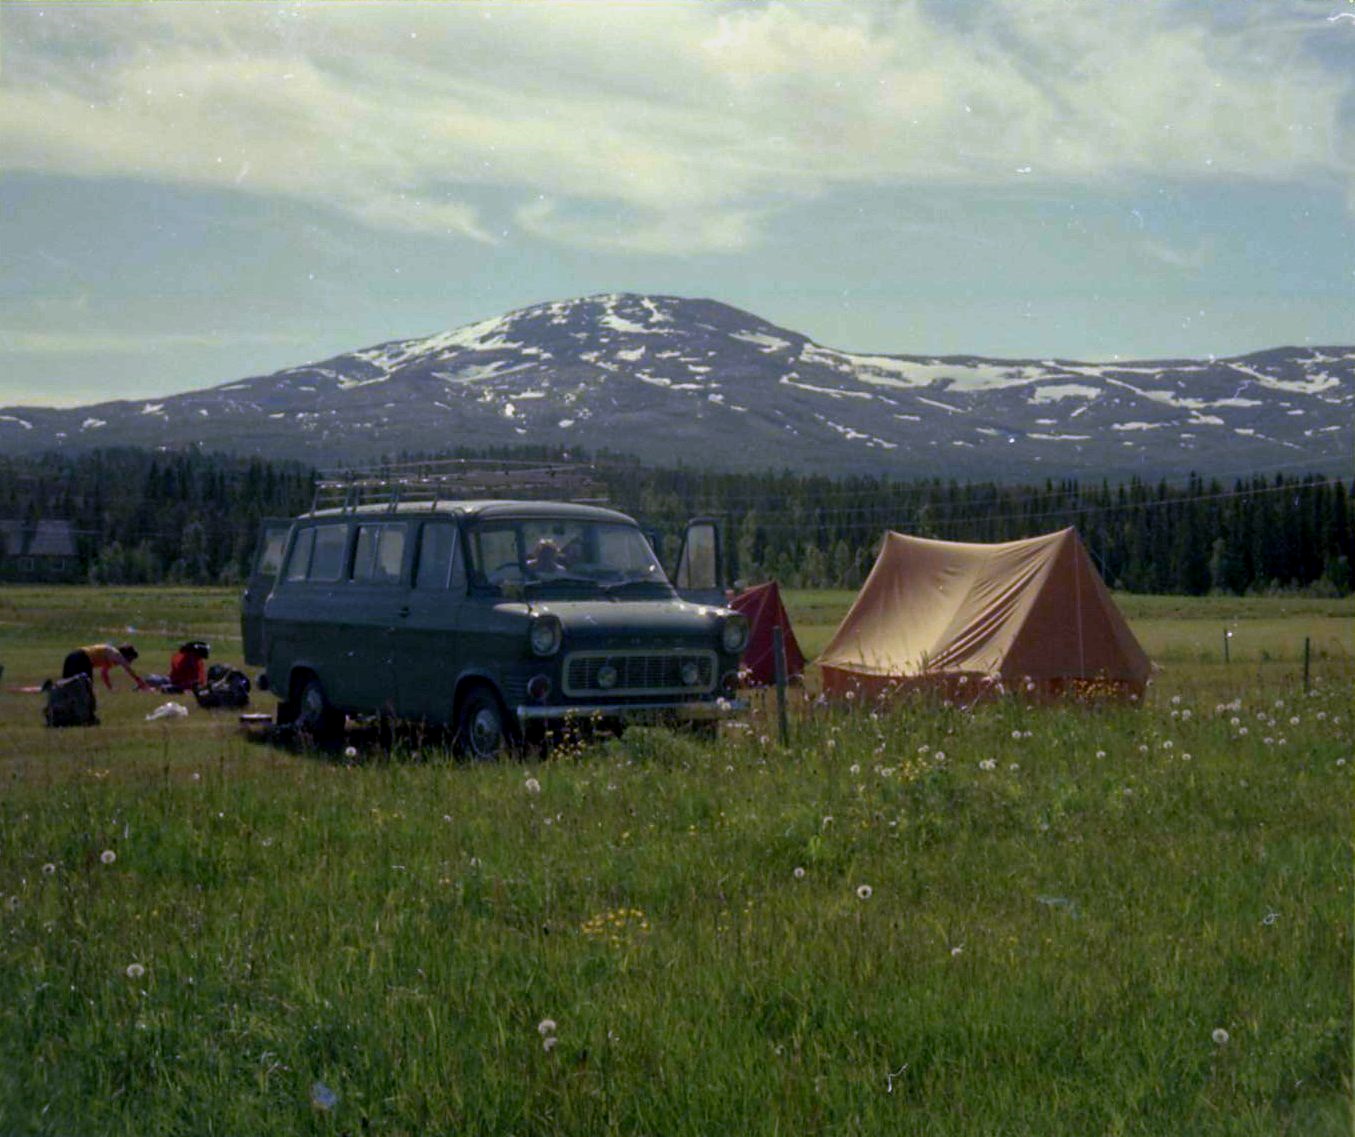 Campsite at Spitzespulen in the Jotunheim region of Norway